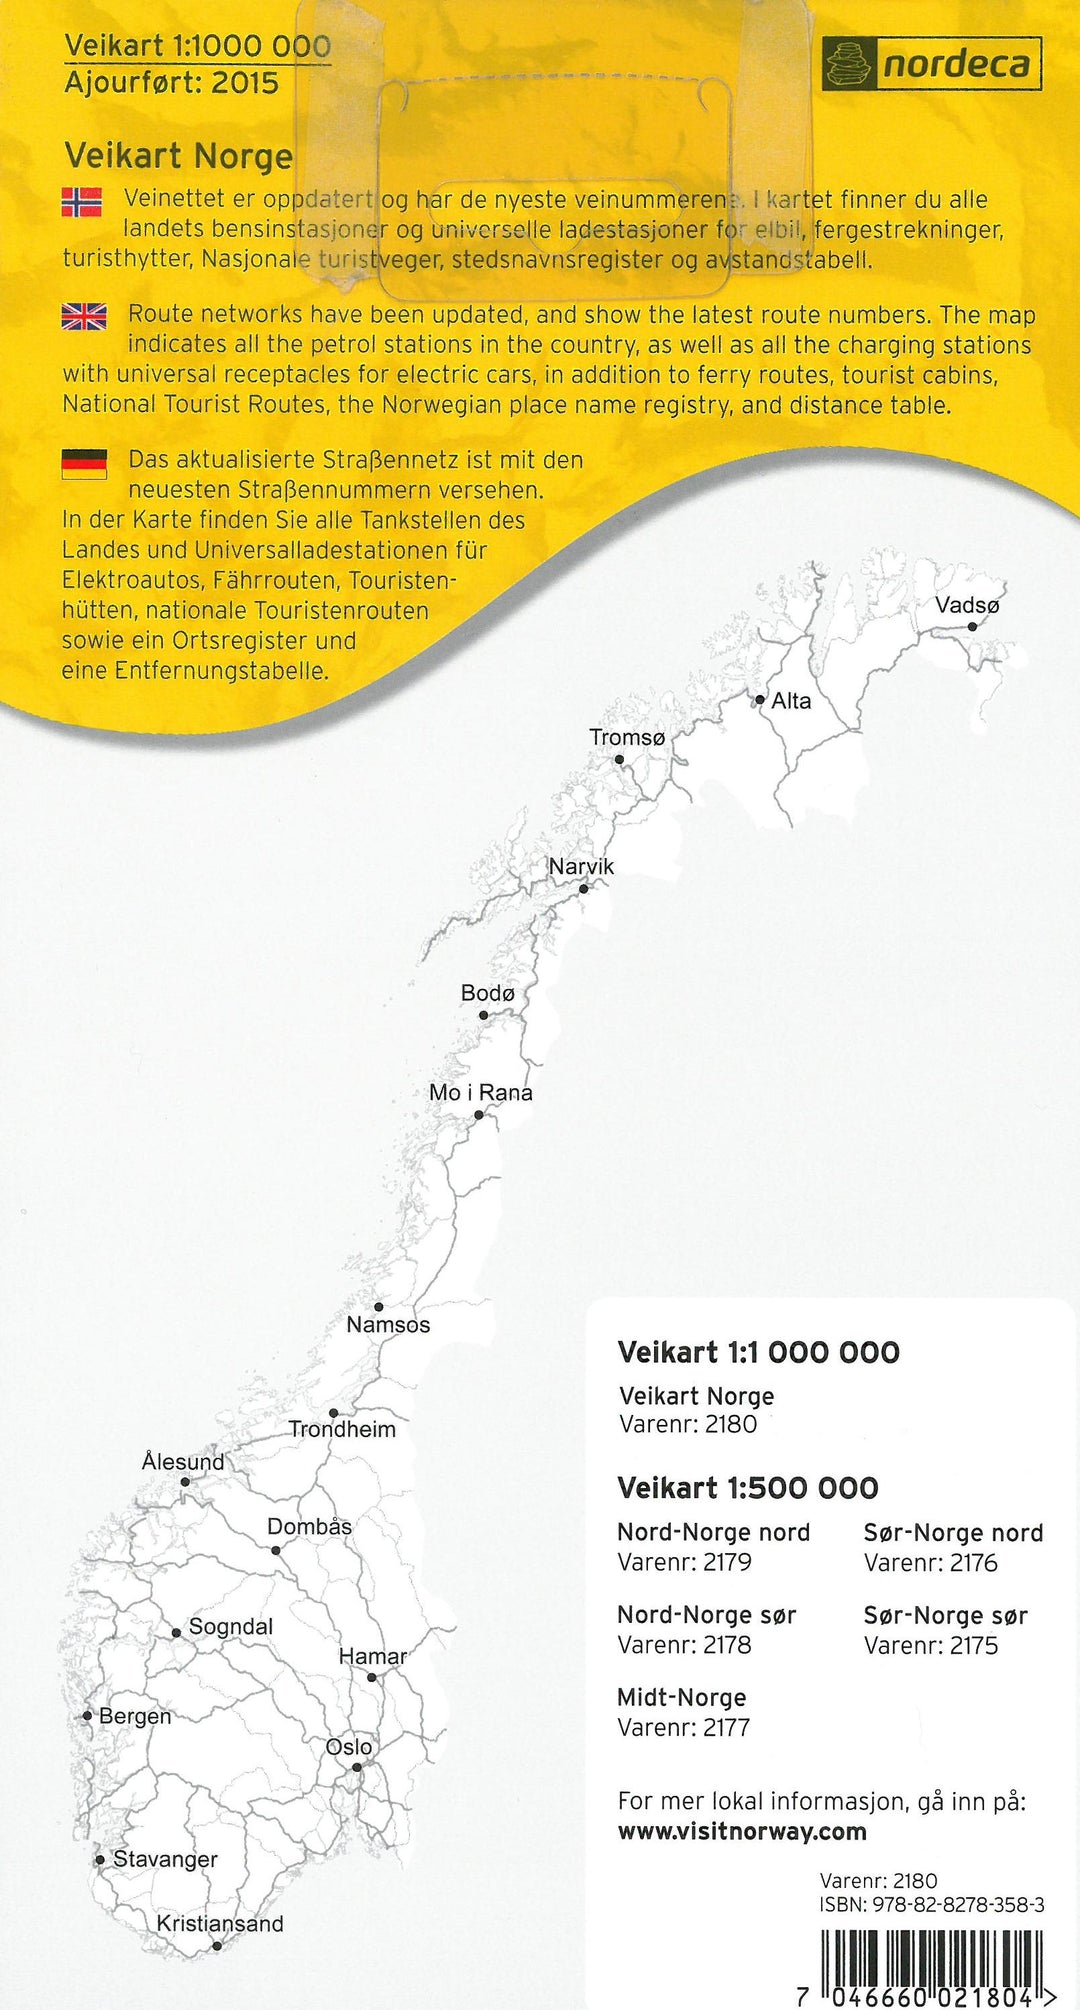 Carte routière n° 2180 - Norvège | Nordeca - Veikart carte pliée Nordeca 